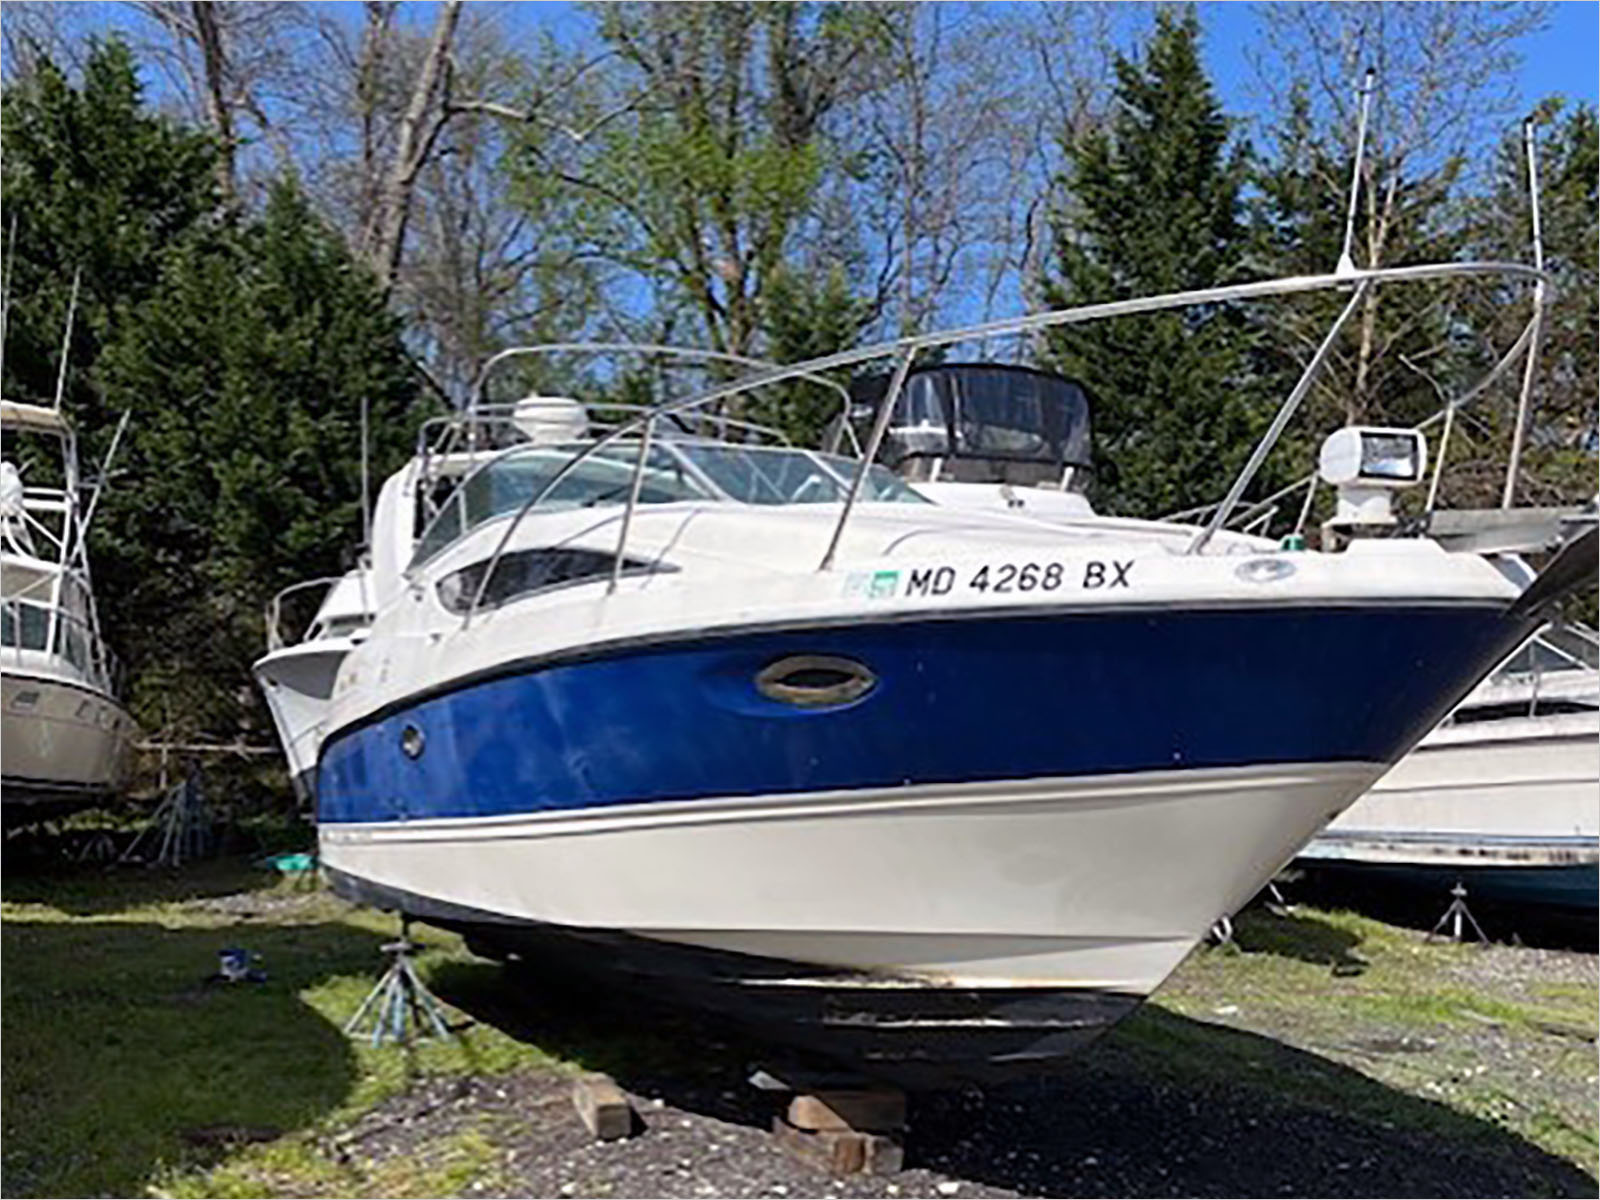 salvage catamaran for sale florida